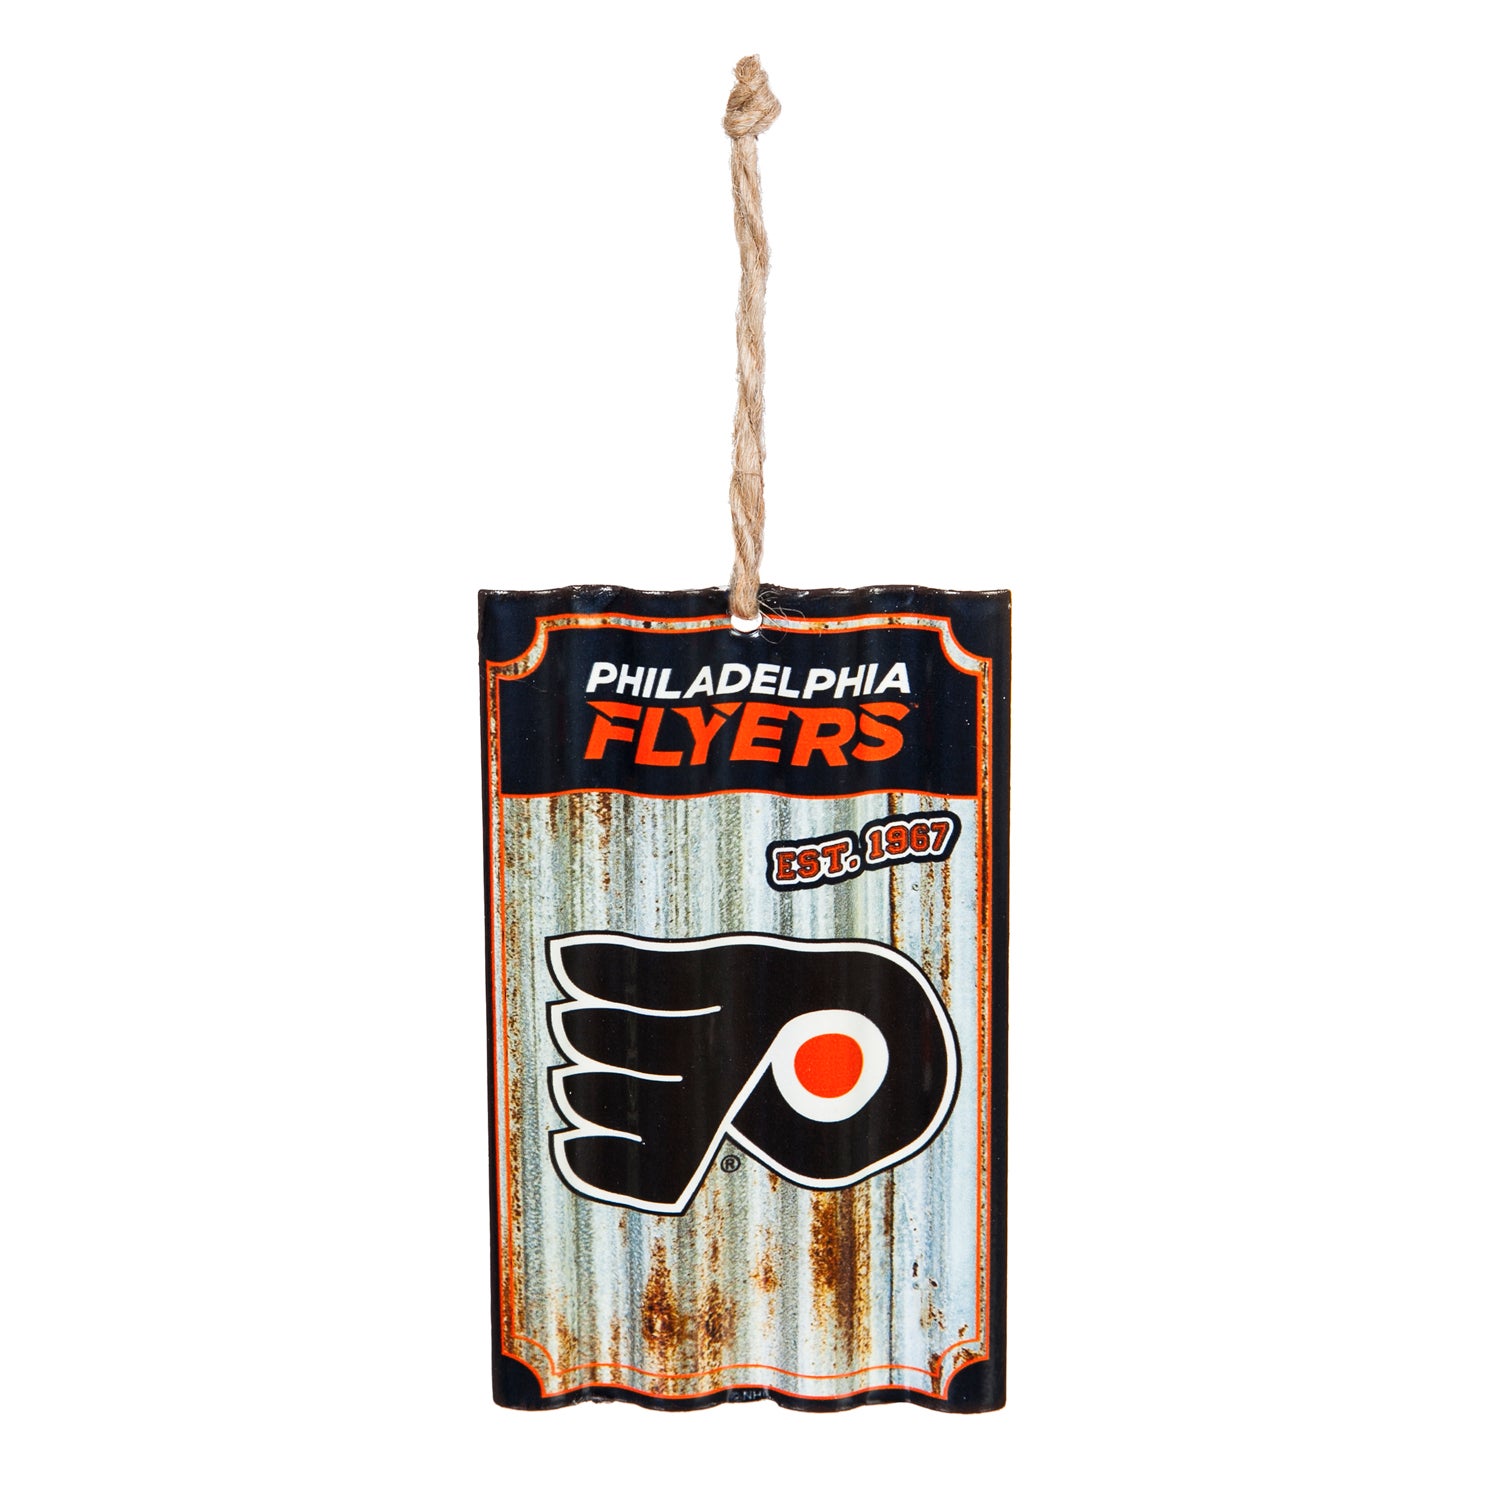 Philadelphia Flyers Corrugated Metal Ornament